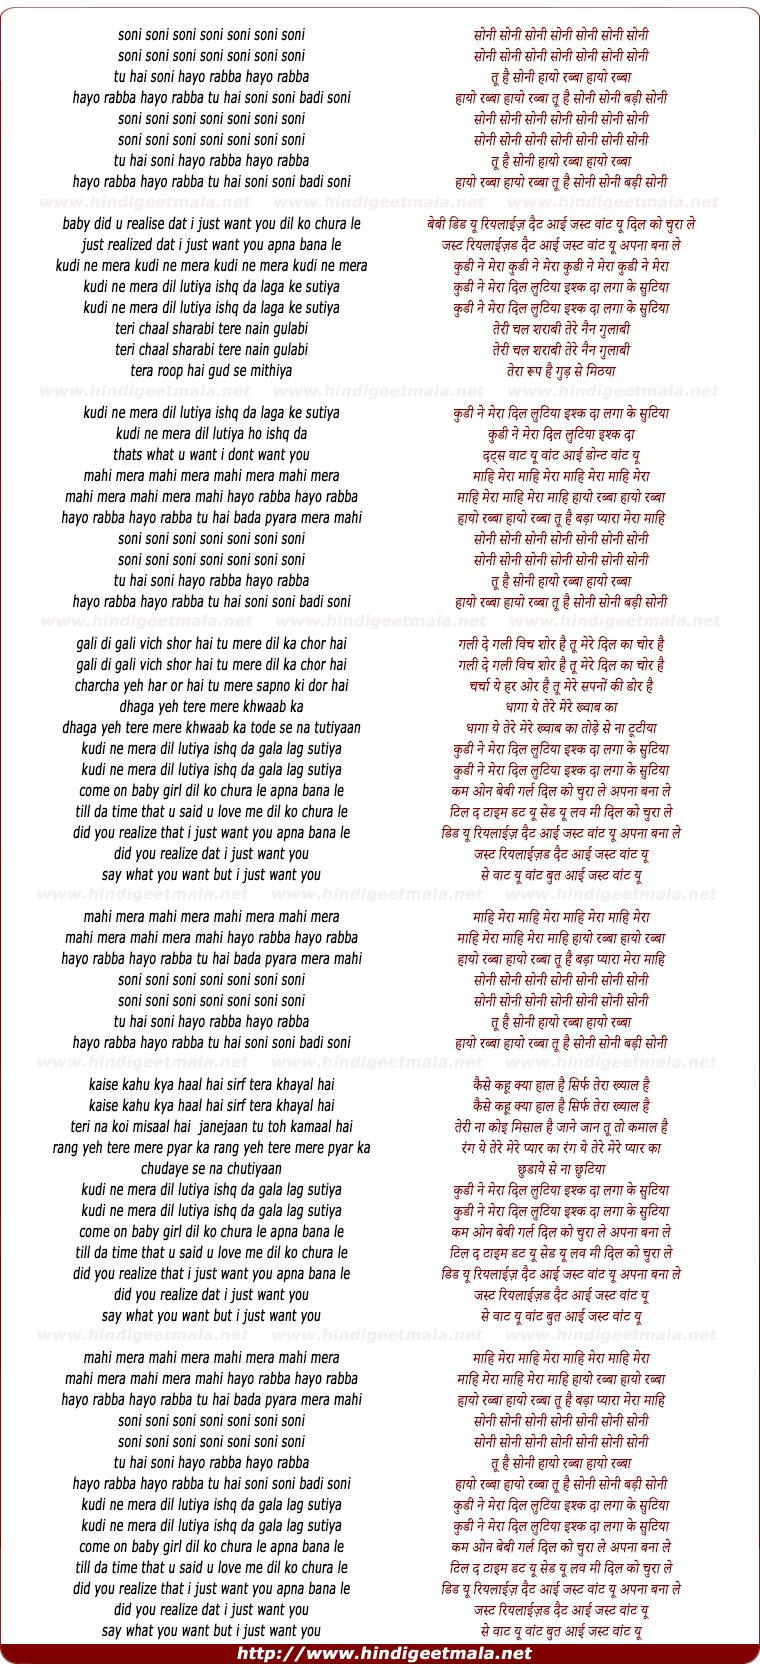 lyrics of song Tu Hain Soni (Kudi Ne Mera Dil Lutiya - Maar Sutiya)